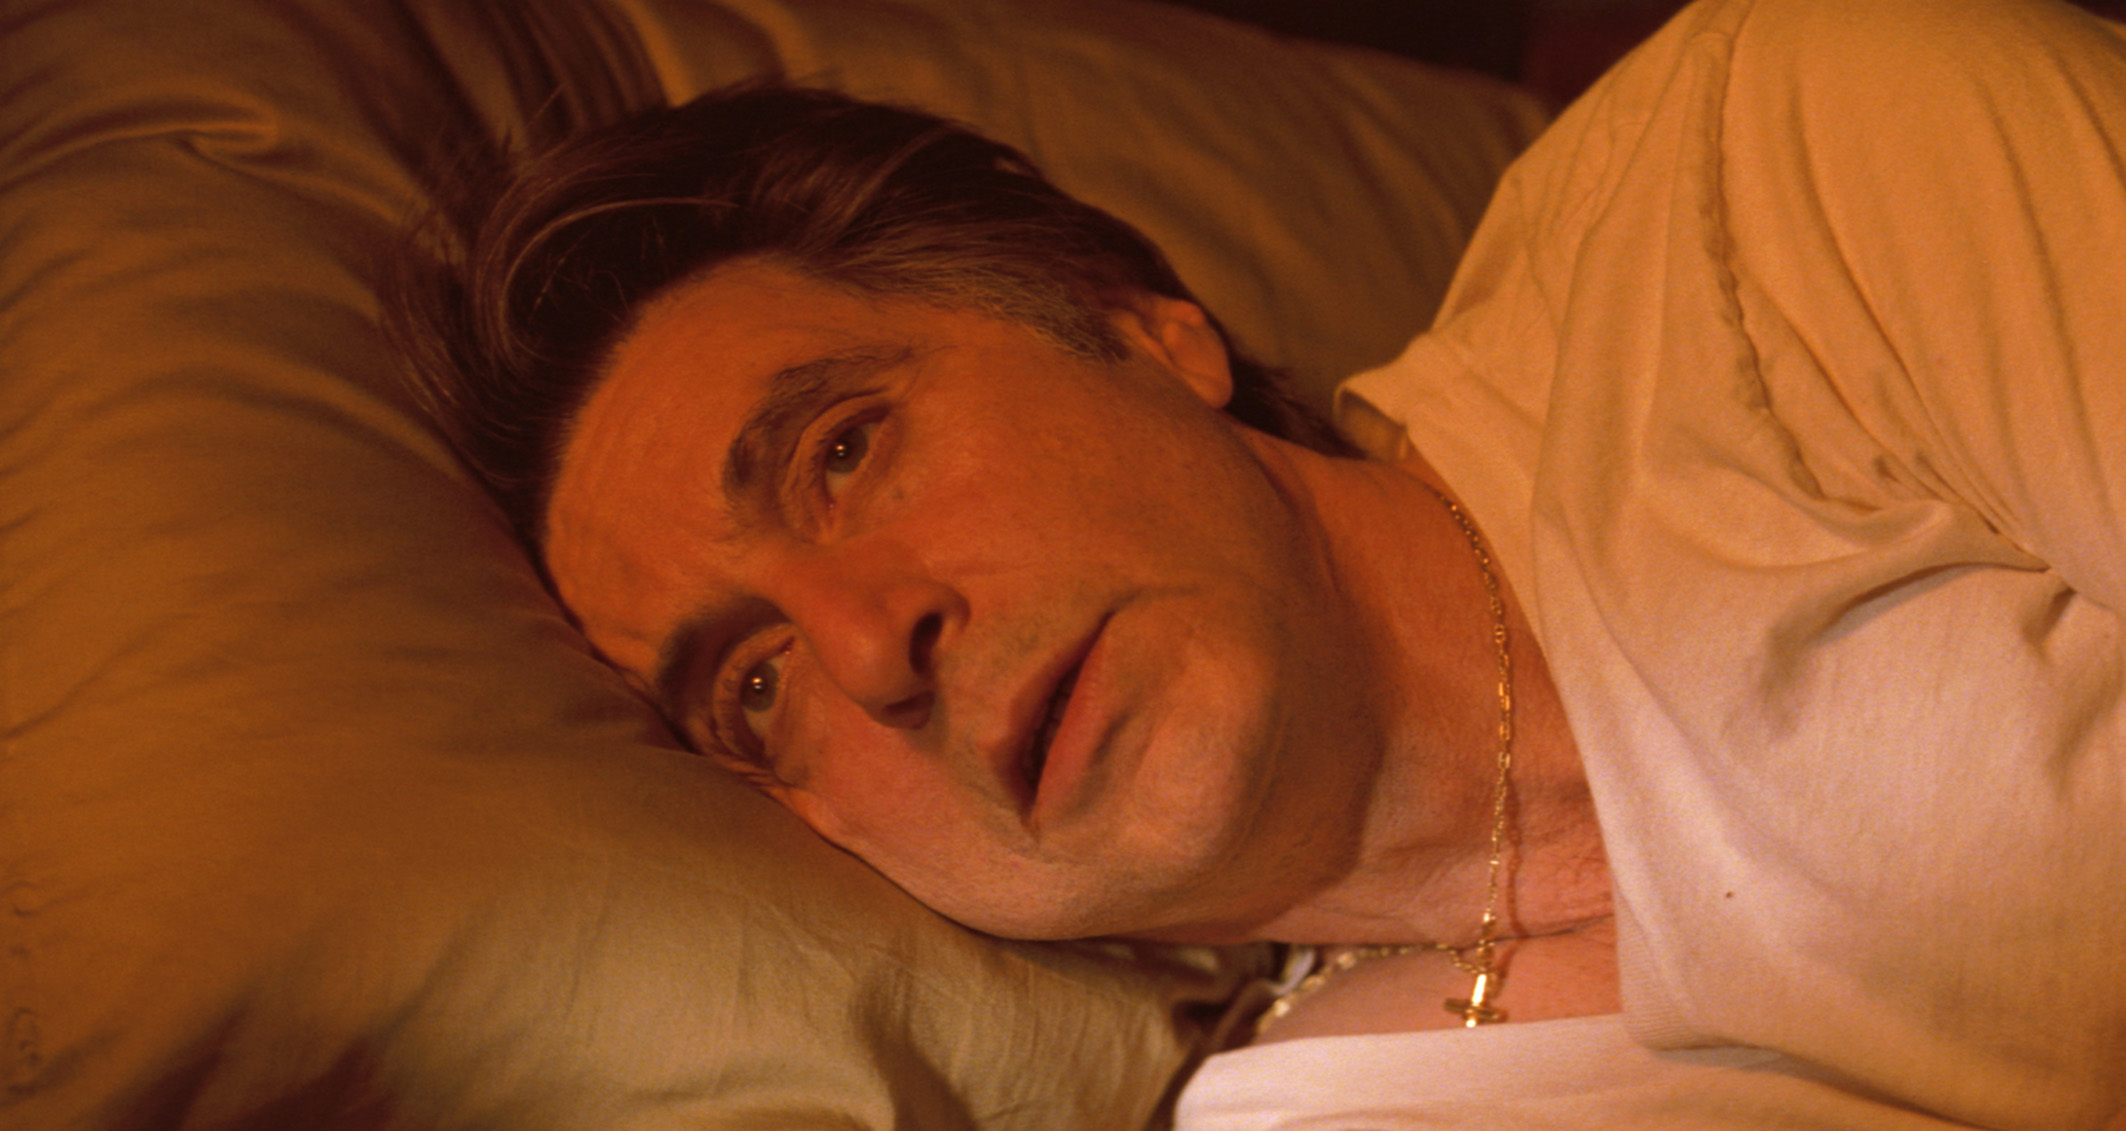 Al Pacino in Insomnia